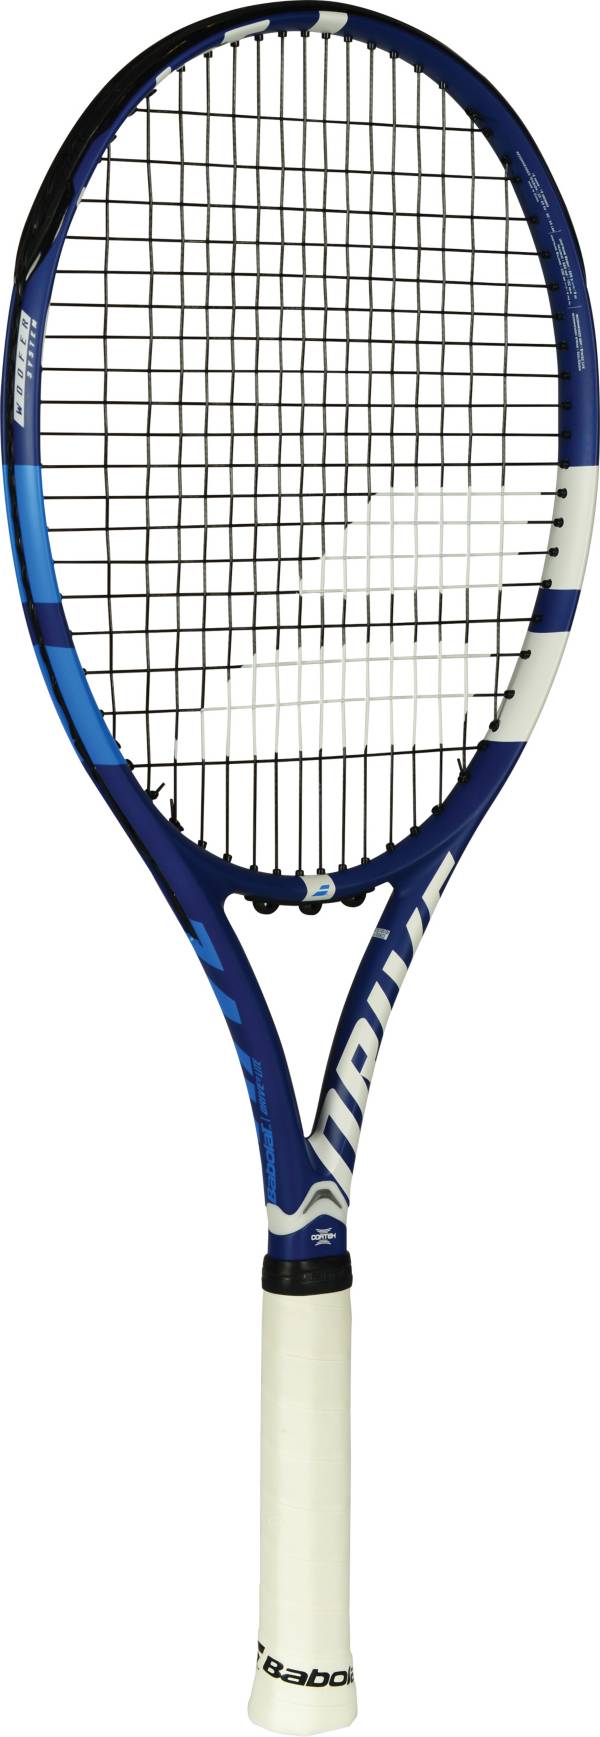 Babolat Drive G Lite Tennis Racquet - Unstrung product image